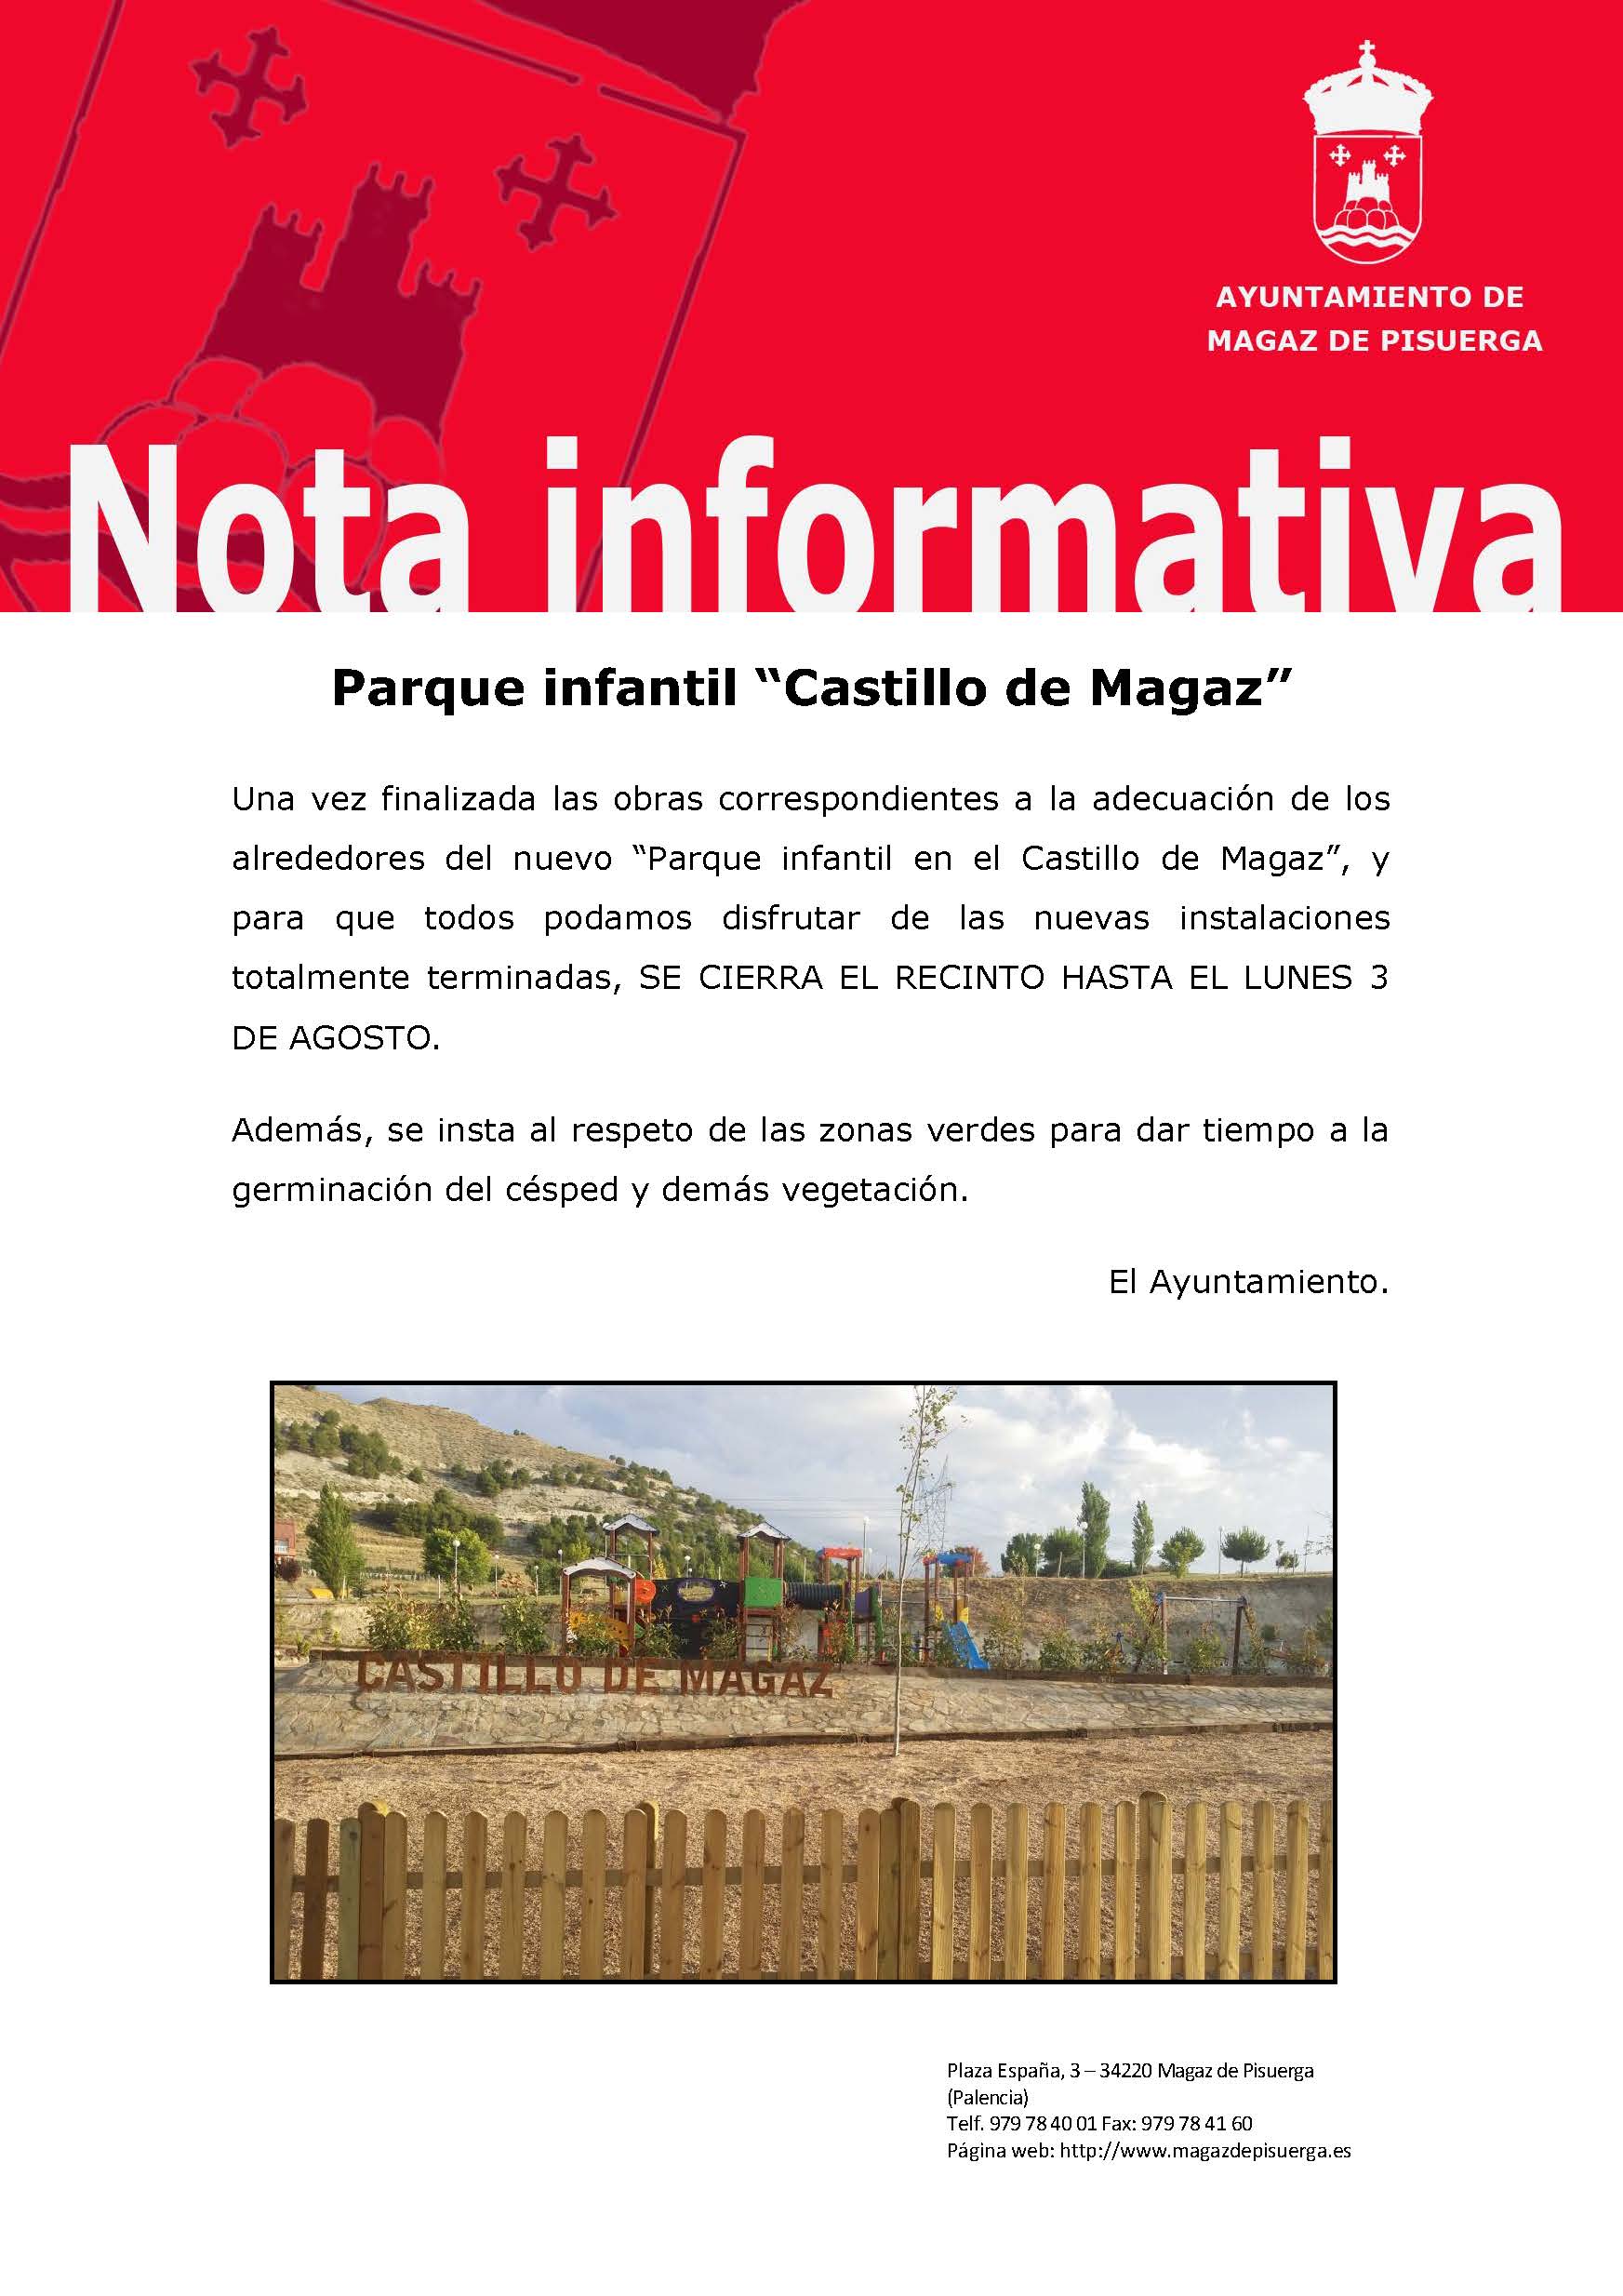 Nota informativa, parque infantil Castillo de Magaz